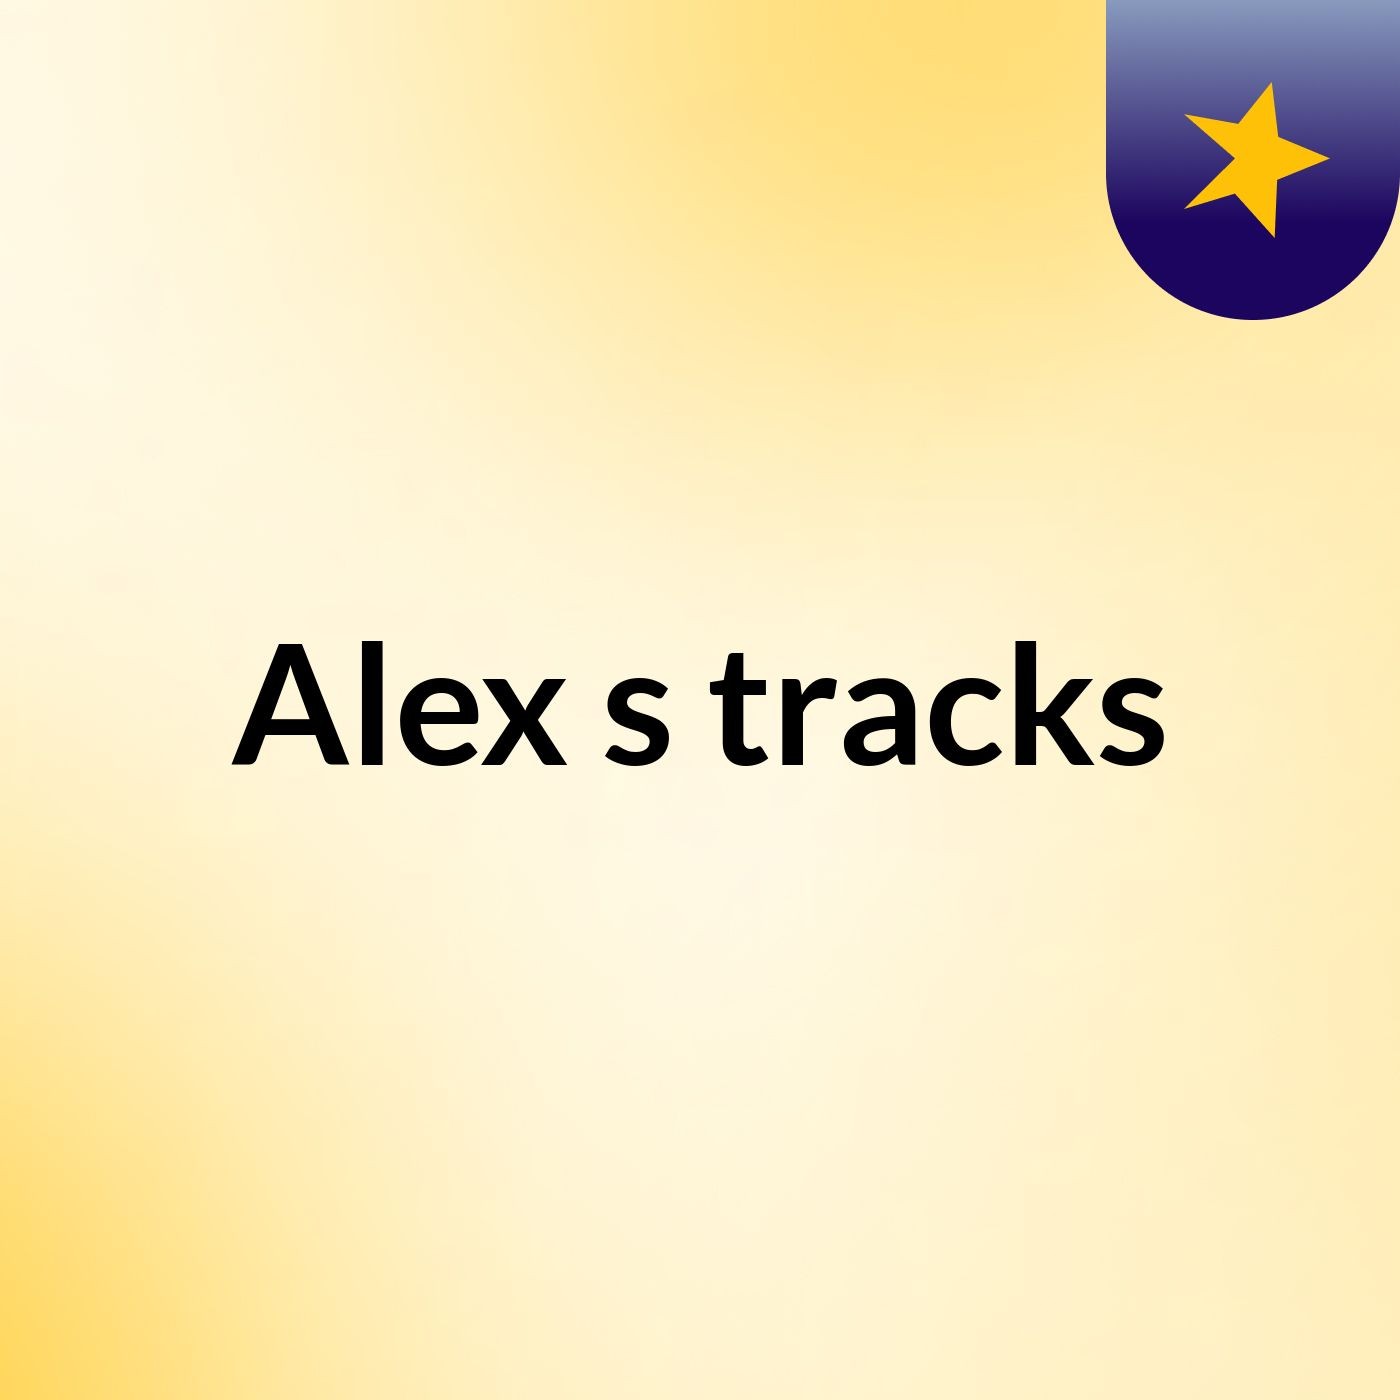 Alex's tracks